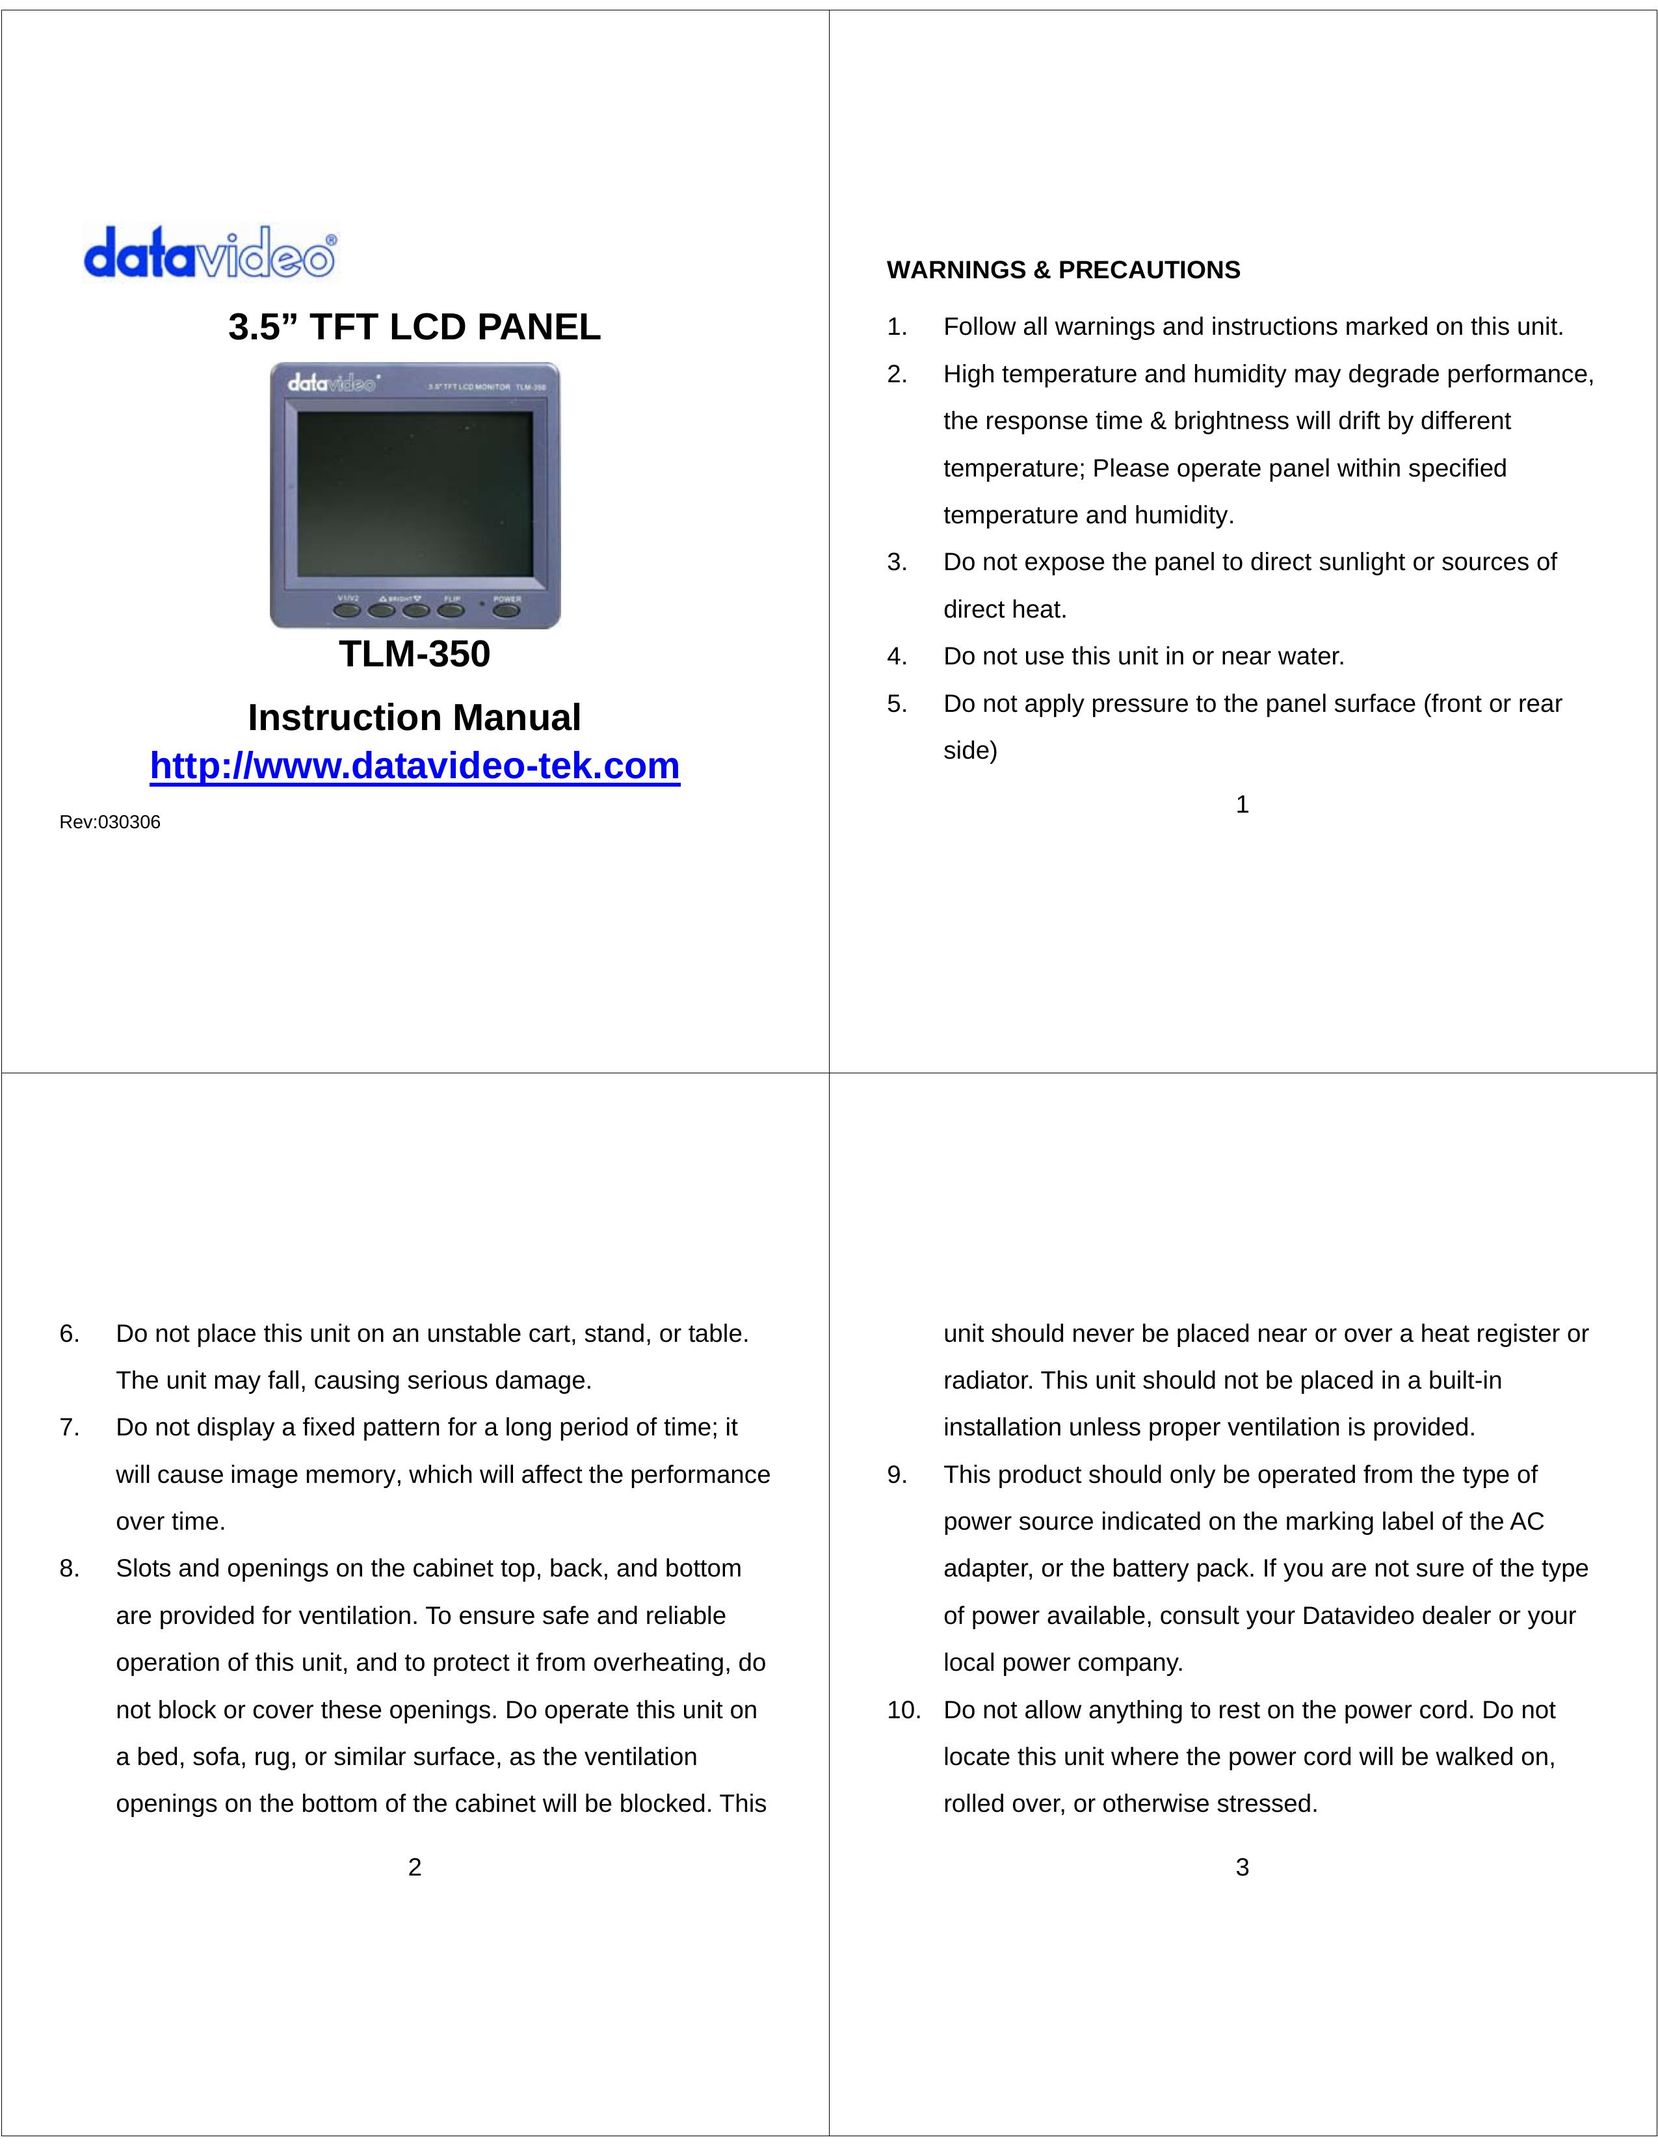 Datavideo TLM-350 Flat Panel Television User Manual